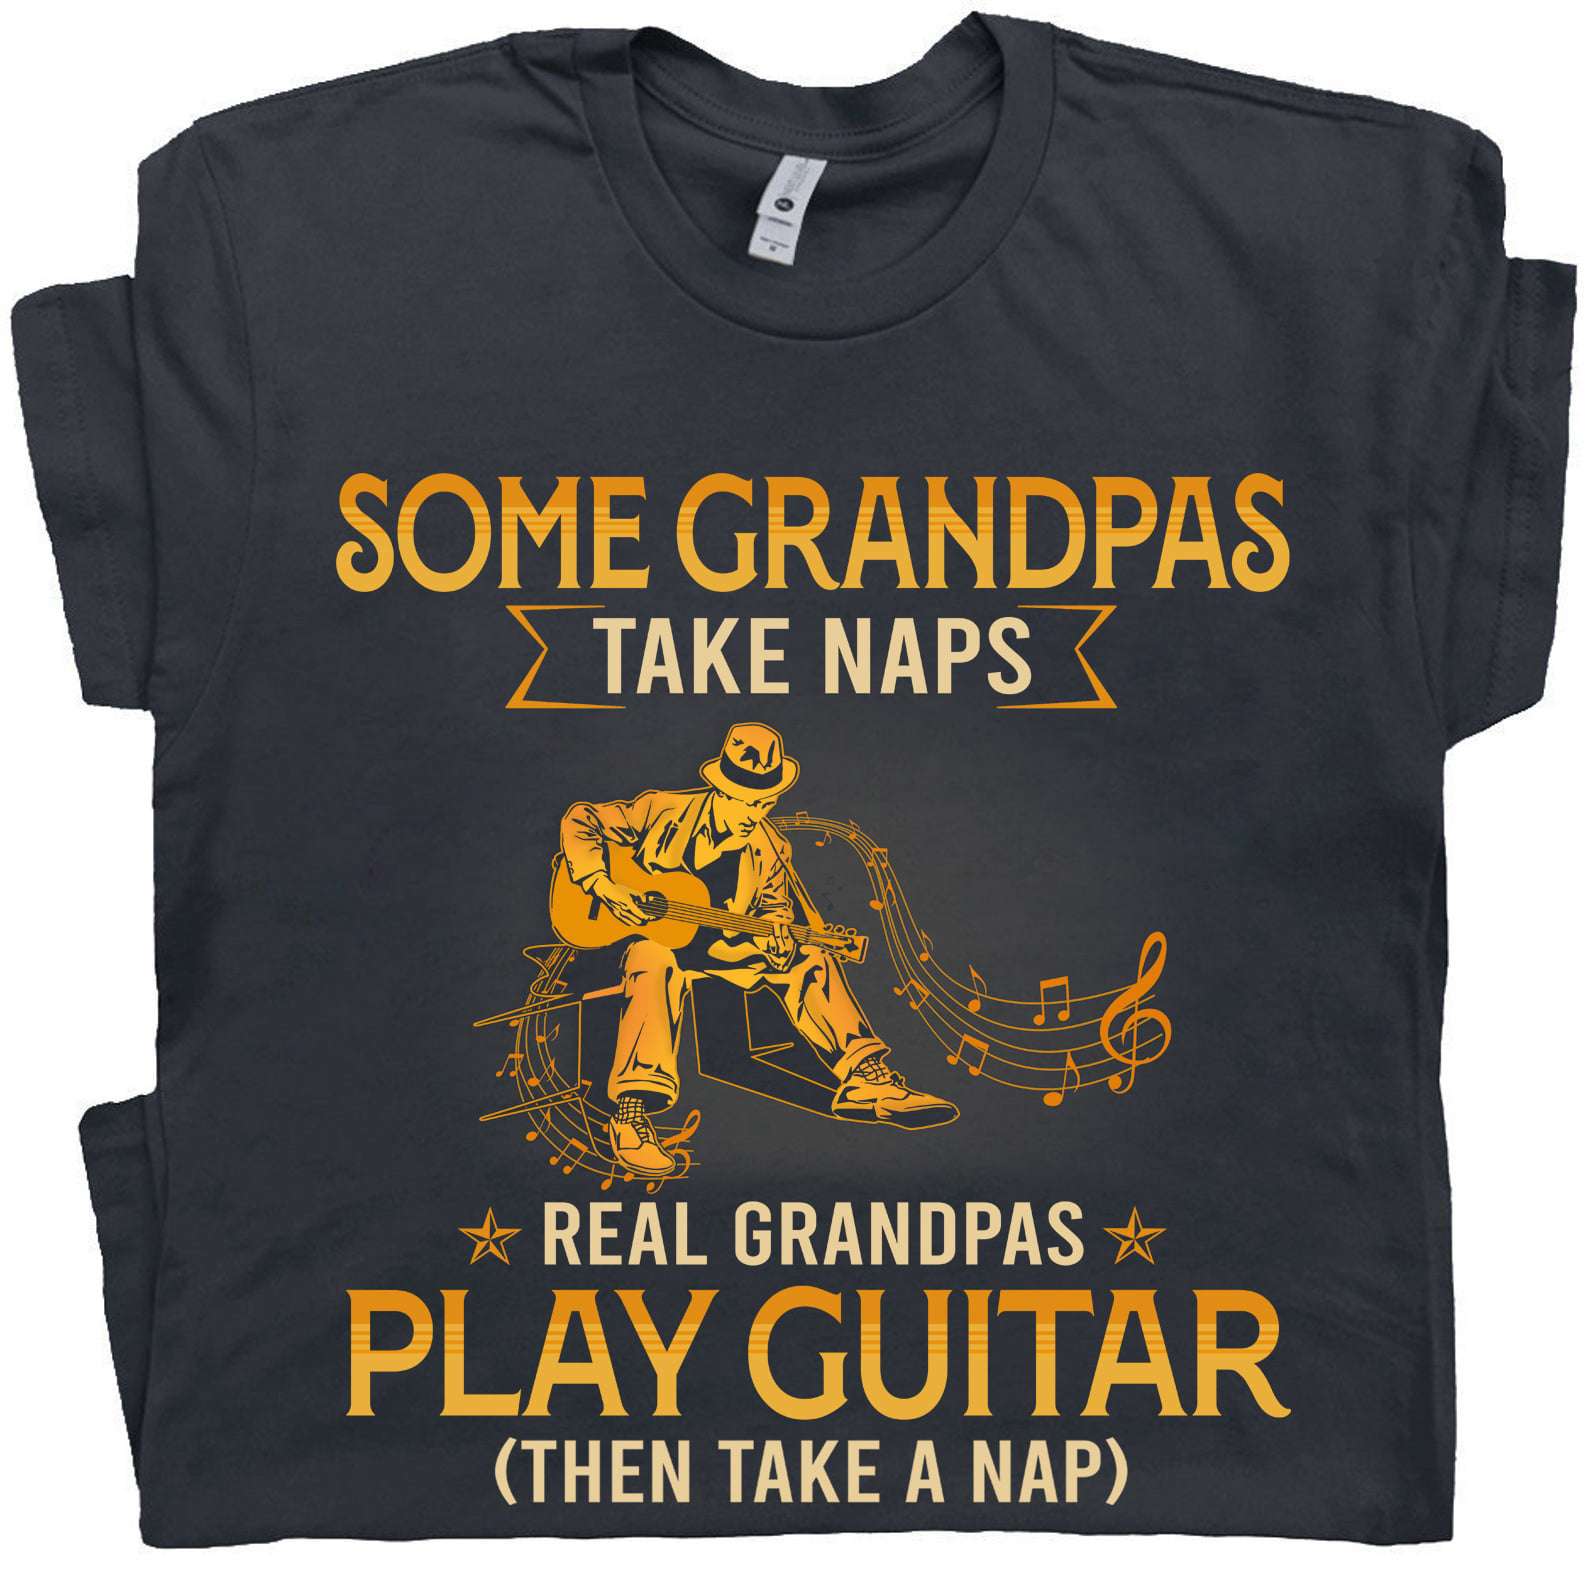 Guitar Man - Some grandpas take naps real granspas play guitar then take a nap